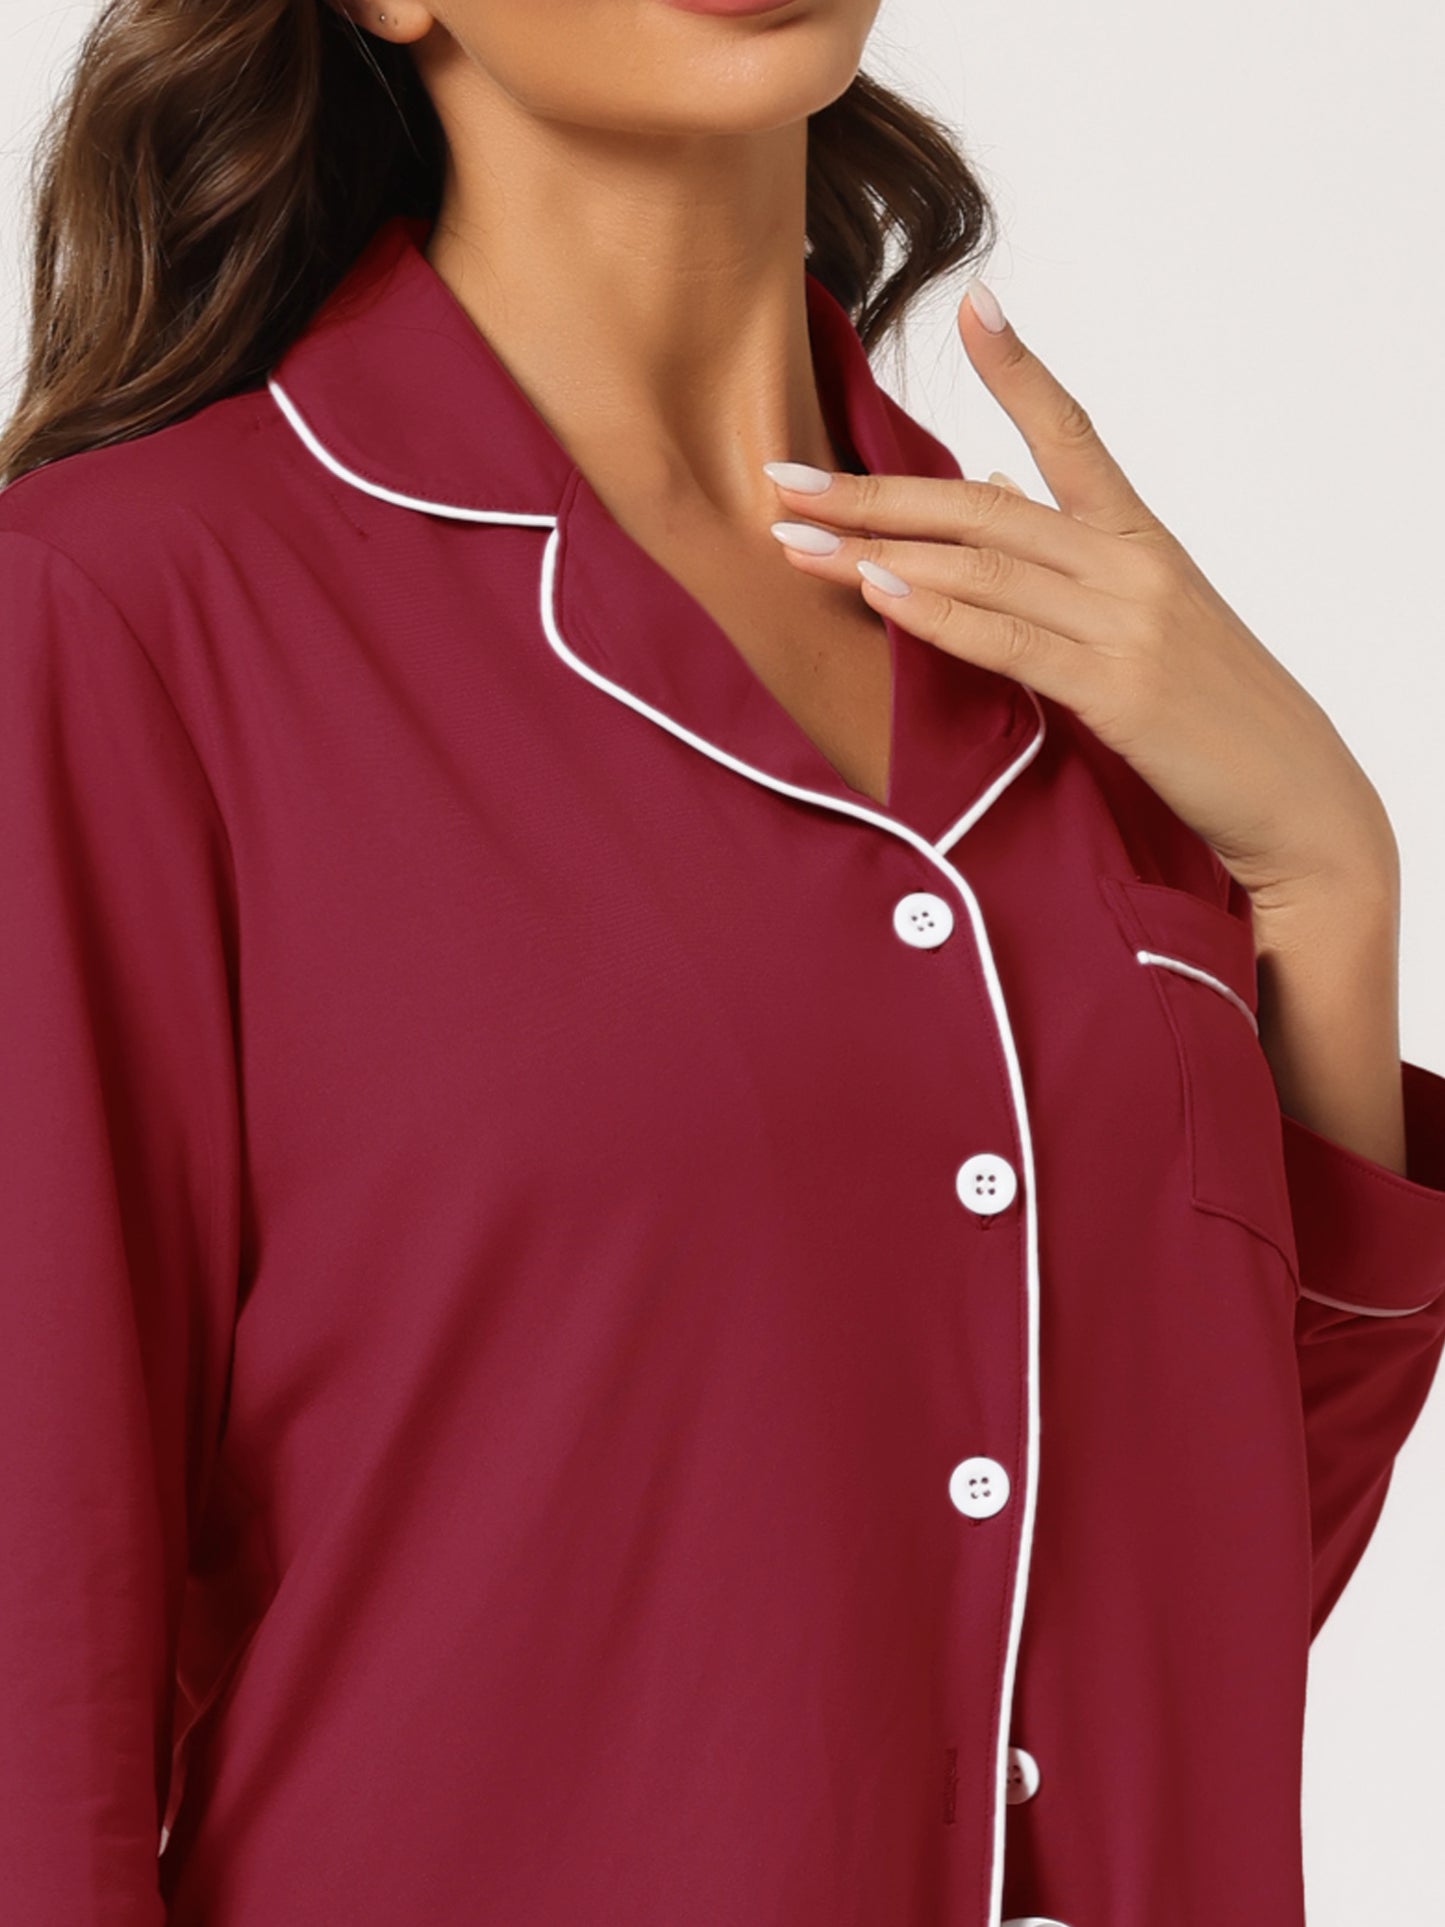 cheibear Pajama Sleep Shirt Nightwear Sleepwear Lounge Modal Pj Sets Red